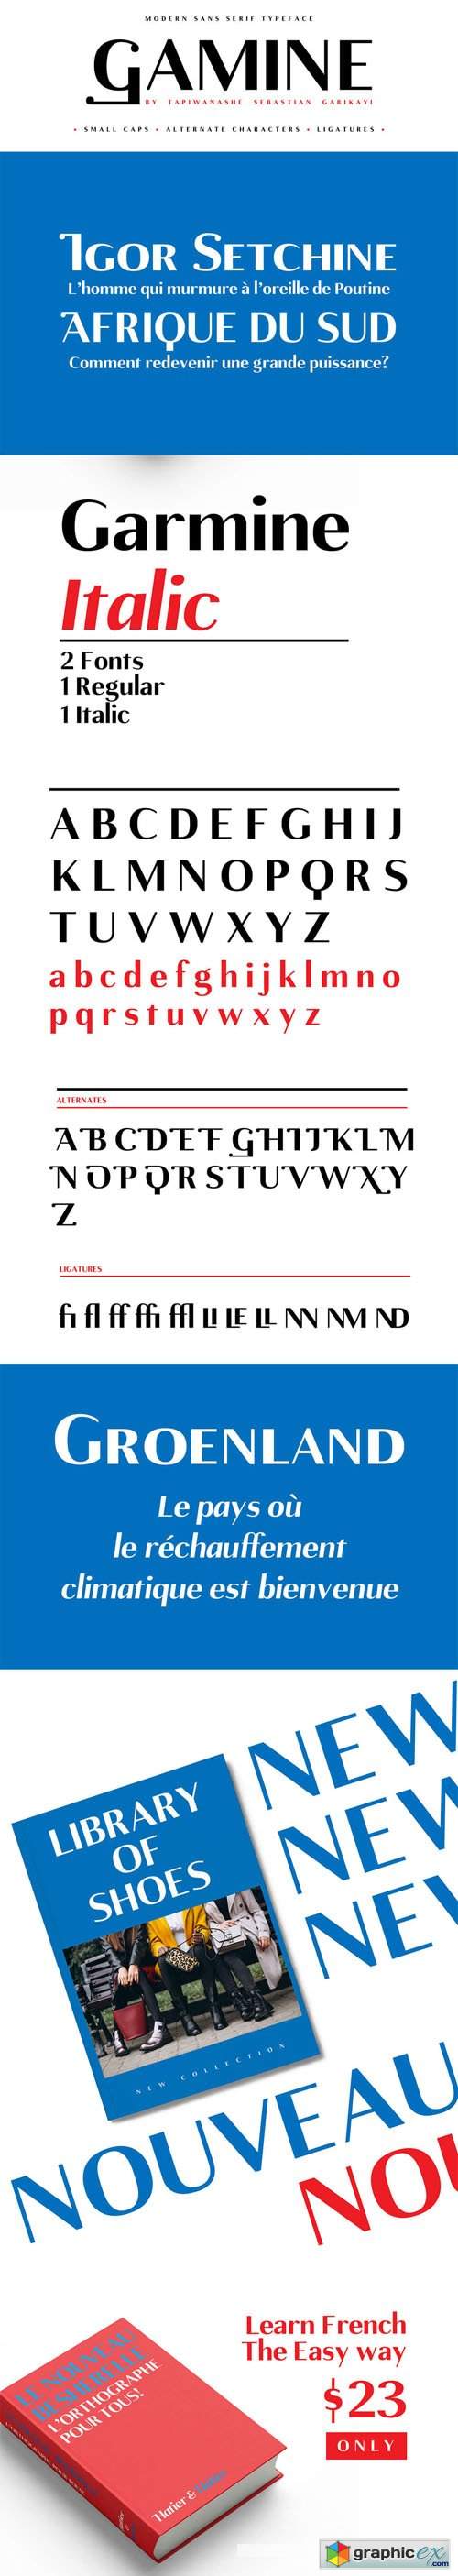 Gamine Modern Sans Serif Typeface